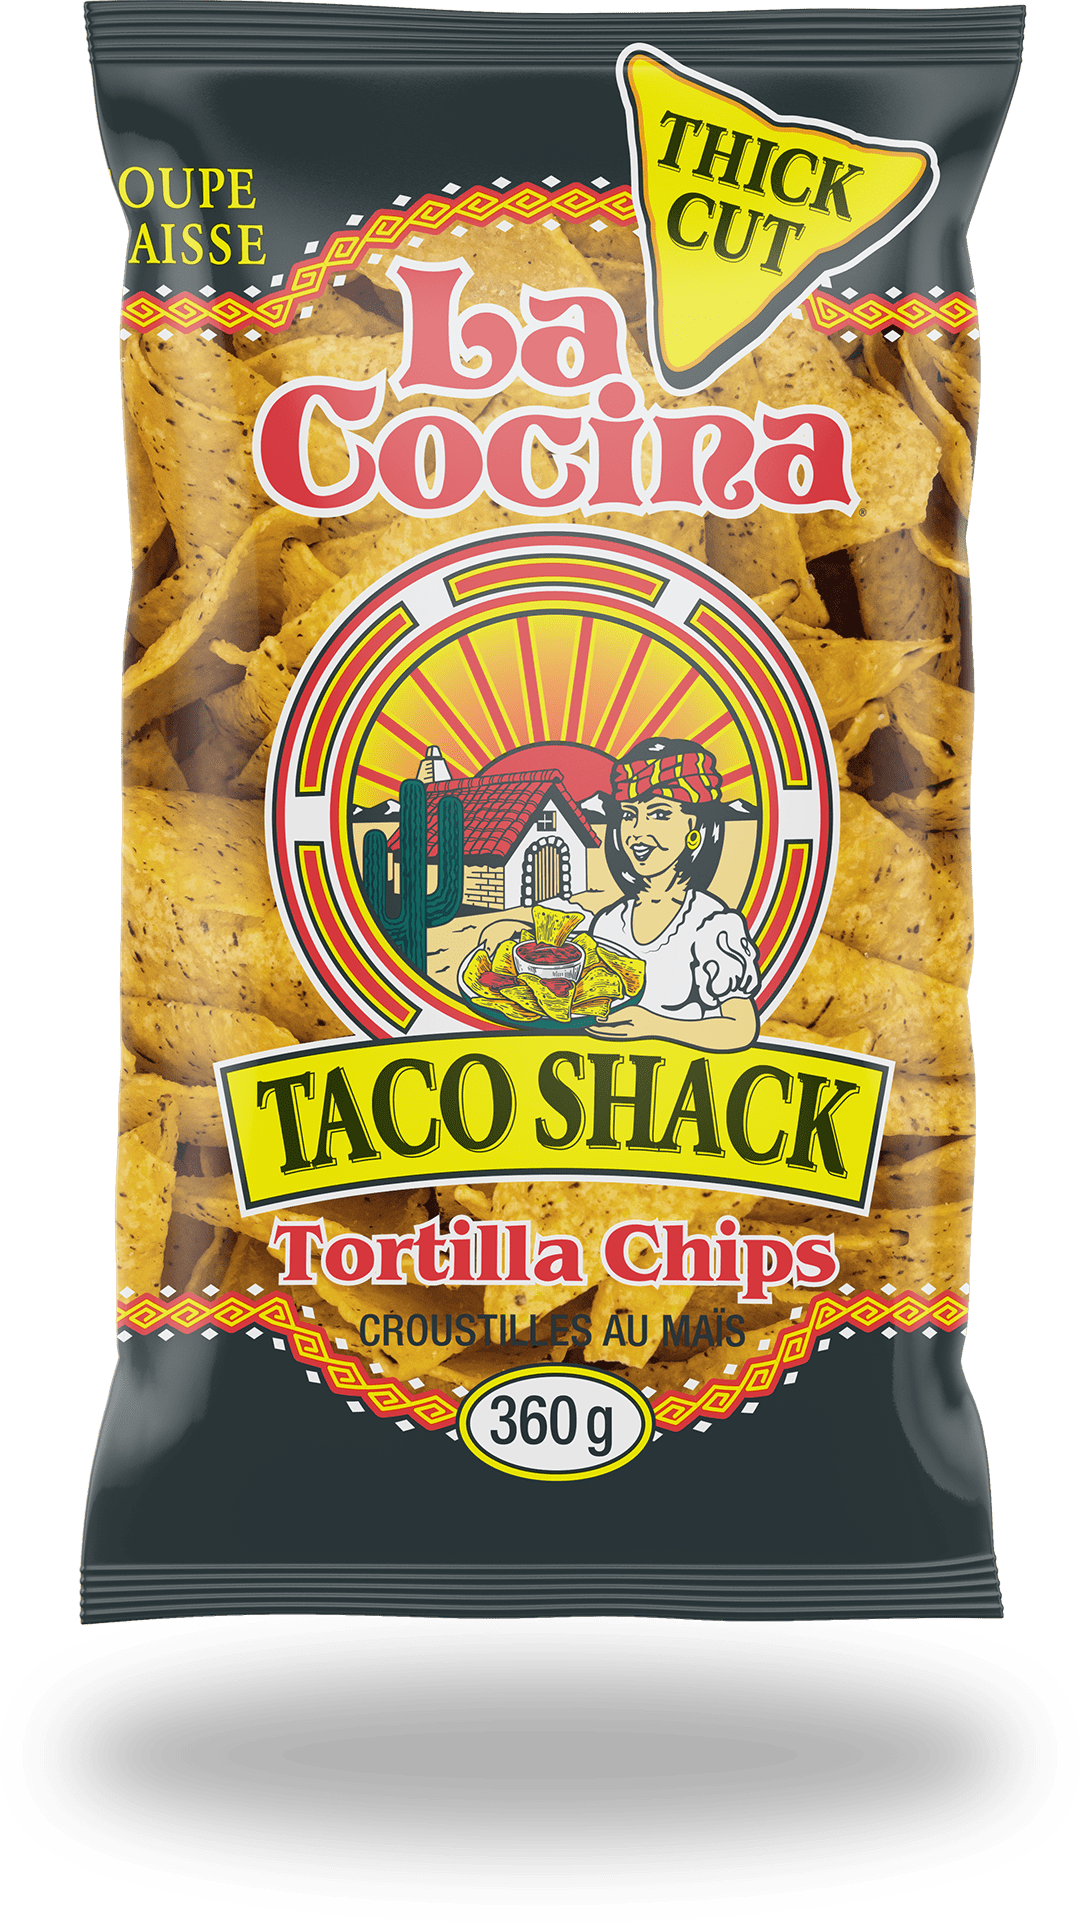 https://www.lacocinafoods.ca/wp-content/uploads/2022/07/la-cocina-image-product-taco-shack.png